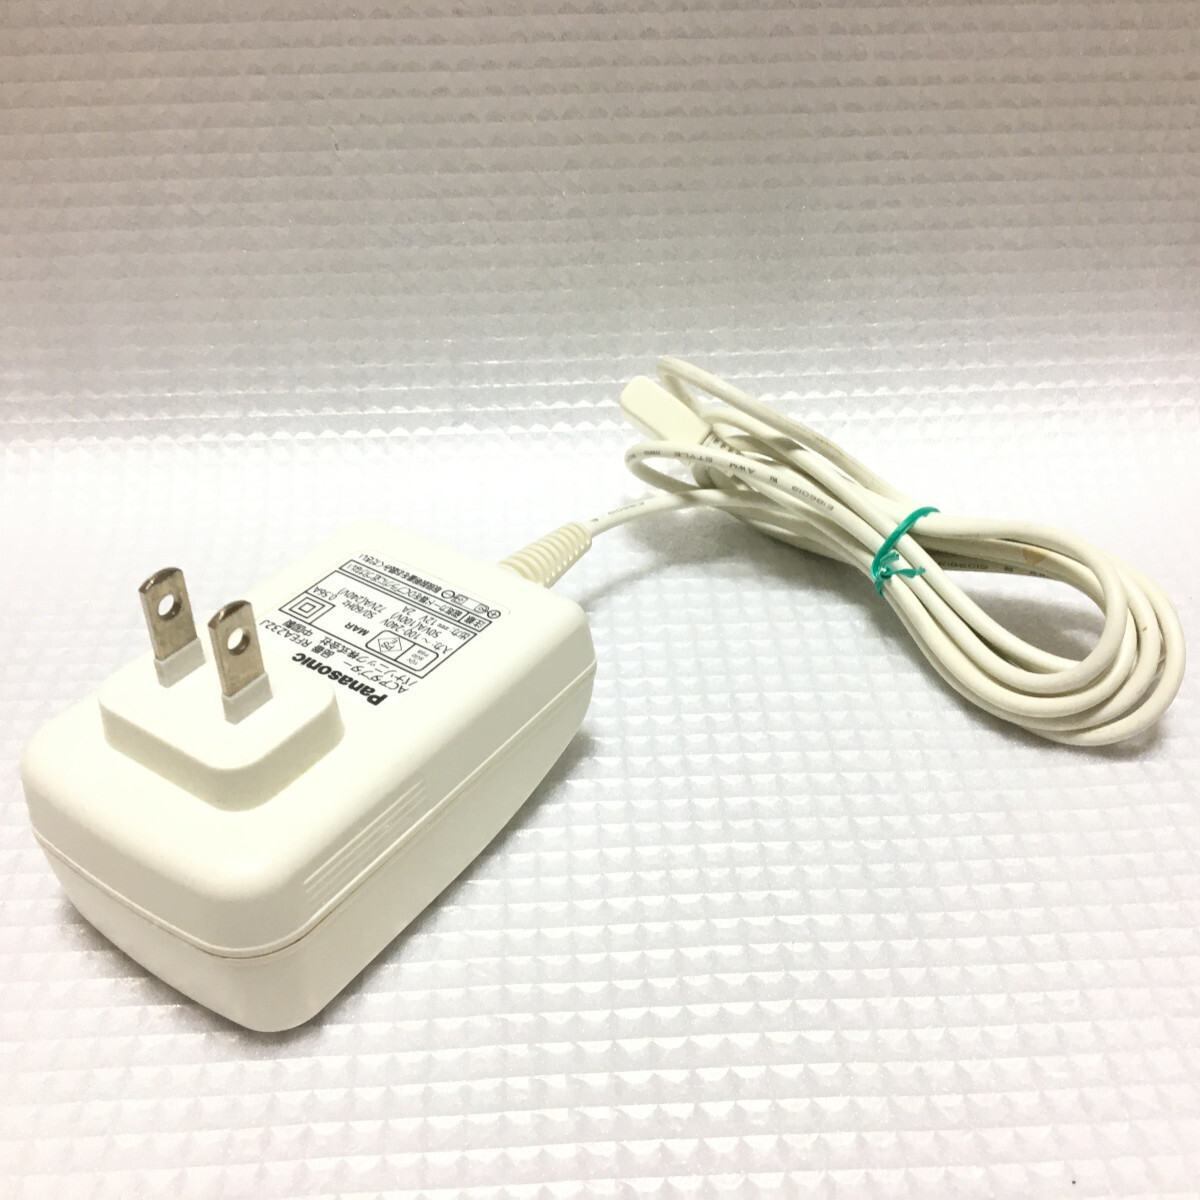 # Panasonic original AC adaptor RFEA232J-5S viera power supply cable UN-15T5-W UN-DM10C1-K UN-JD10T2 UN-JD10T3 UN-DM15C1-K UN-10E5-W